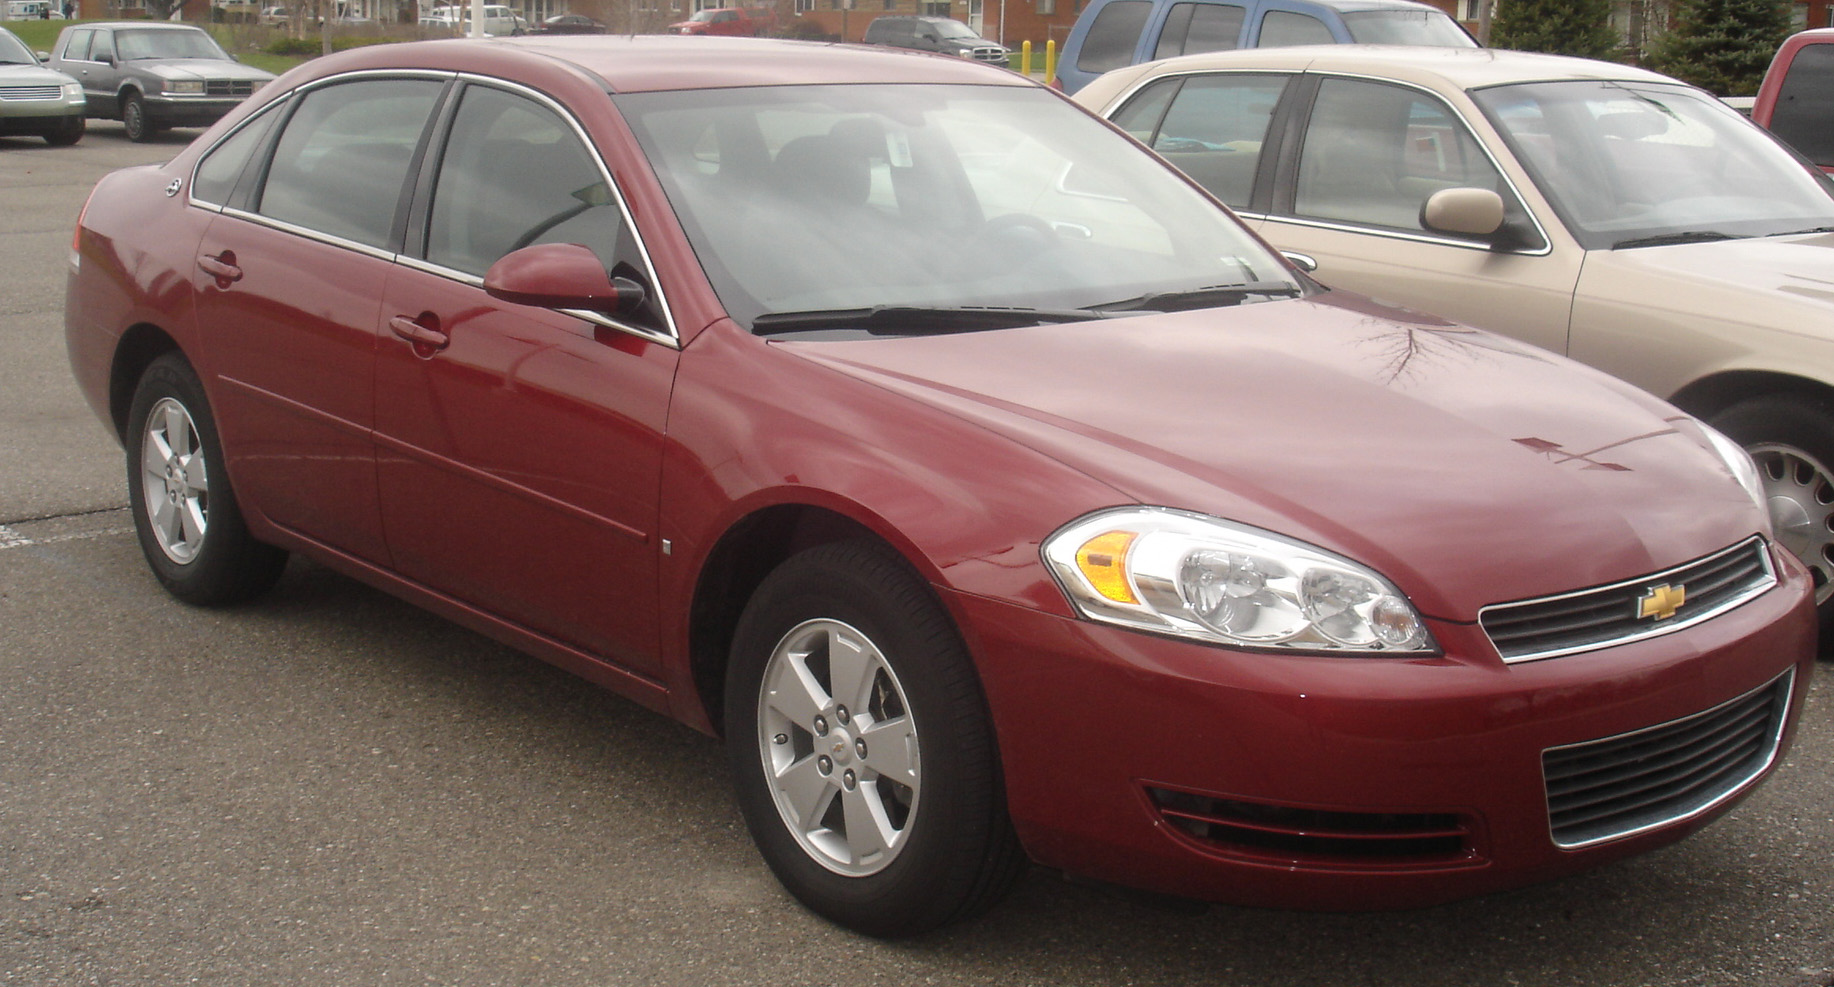 File:Chevrolet Impala - red - 2007.jpg - Wikimedia Commons